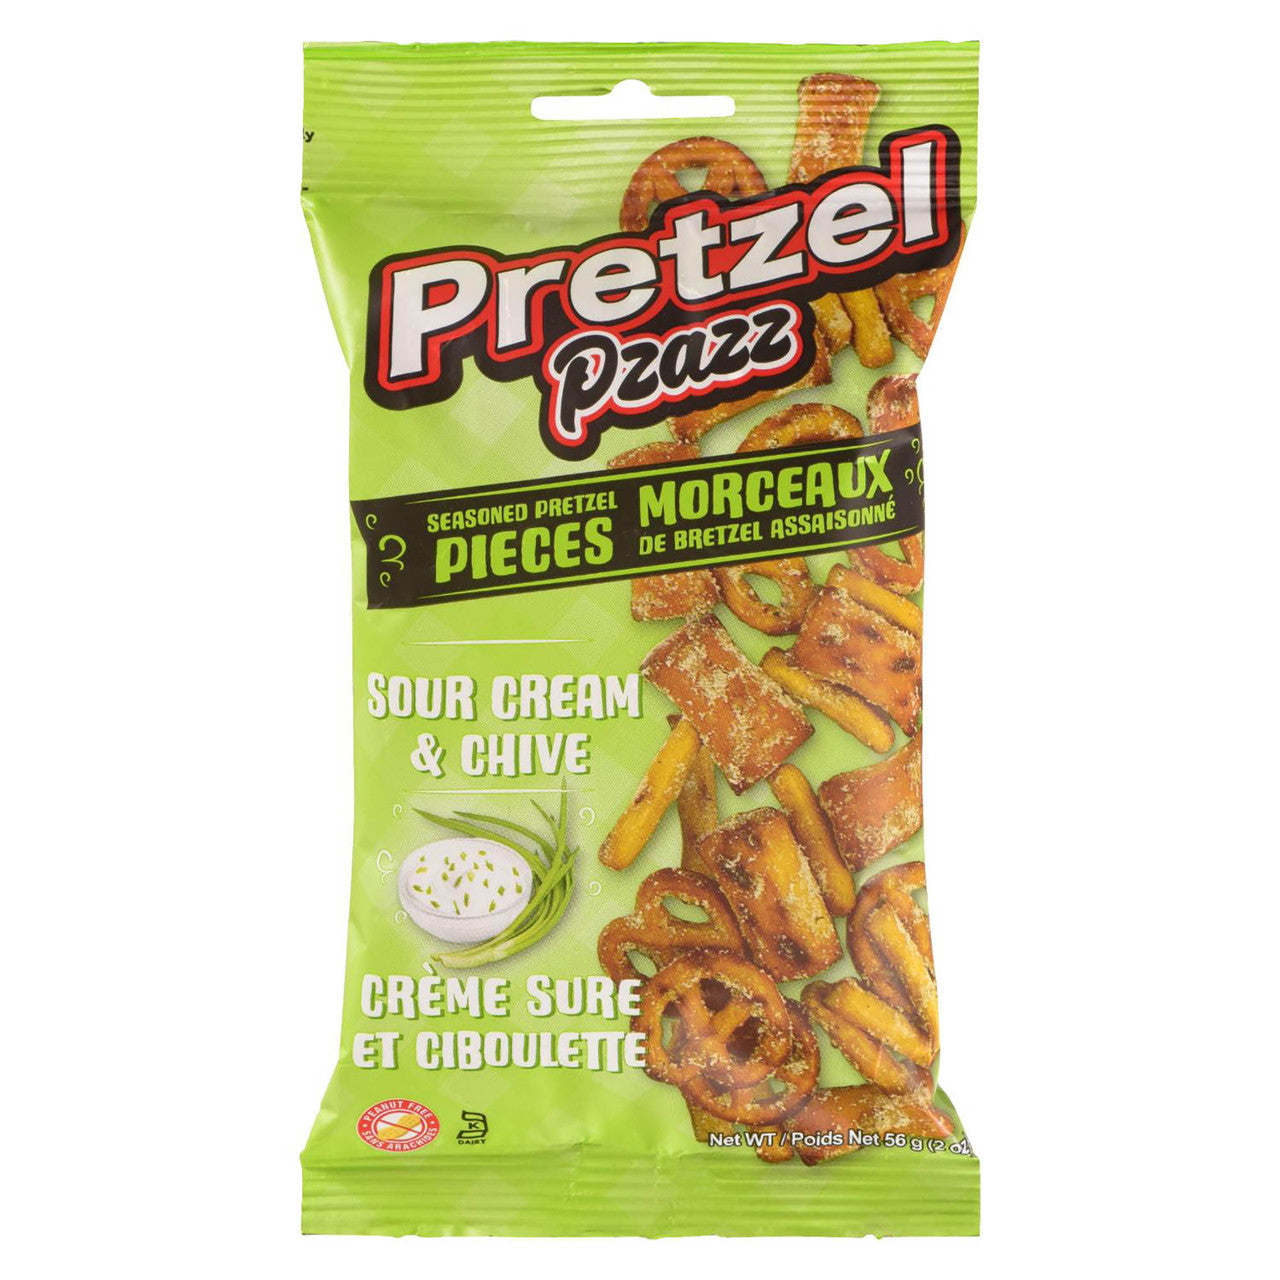 Pretzel Pzazz Seasoned Pretzel Pieces, Sour Cream & Chive, 56g/2 oz., {Imported from Canada}